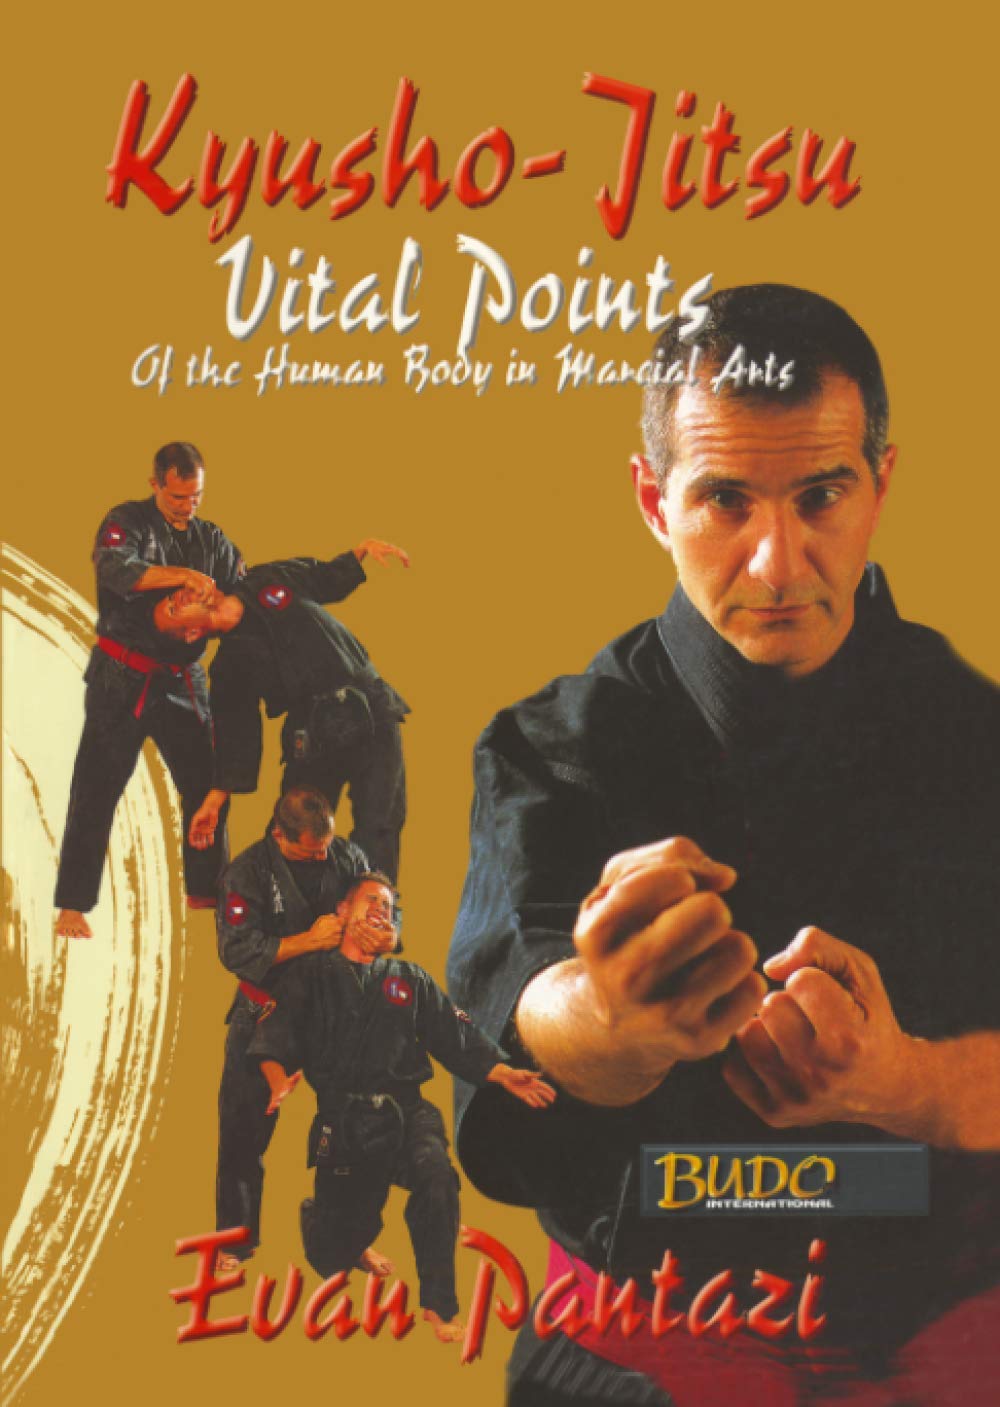 Kyusho-Jitsu: Vital Points Of the Human Body in Martial Arts Book by Evan Pantazi